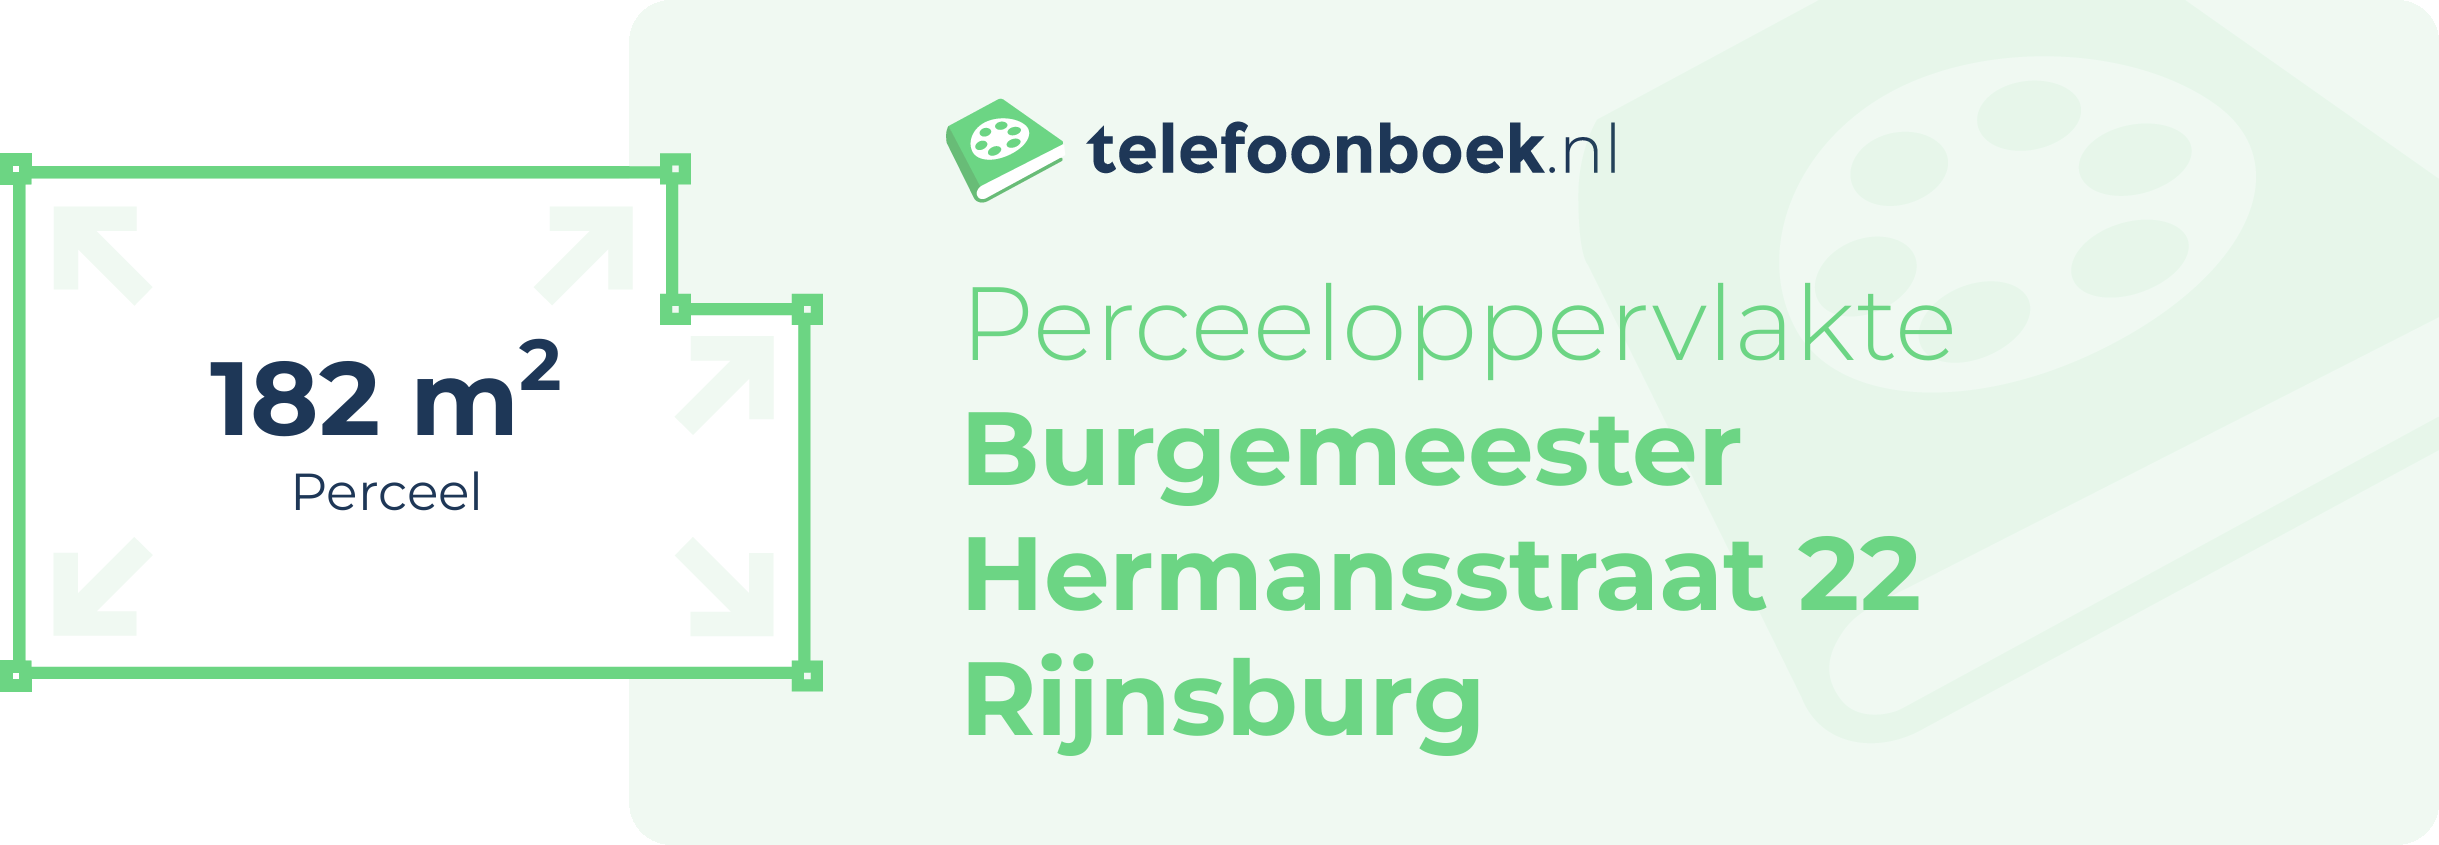 Perceeloppervlakte Burgemeester Hermansstraat 22 Rijnsburg